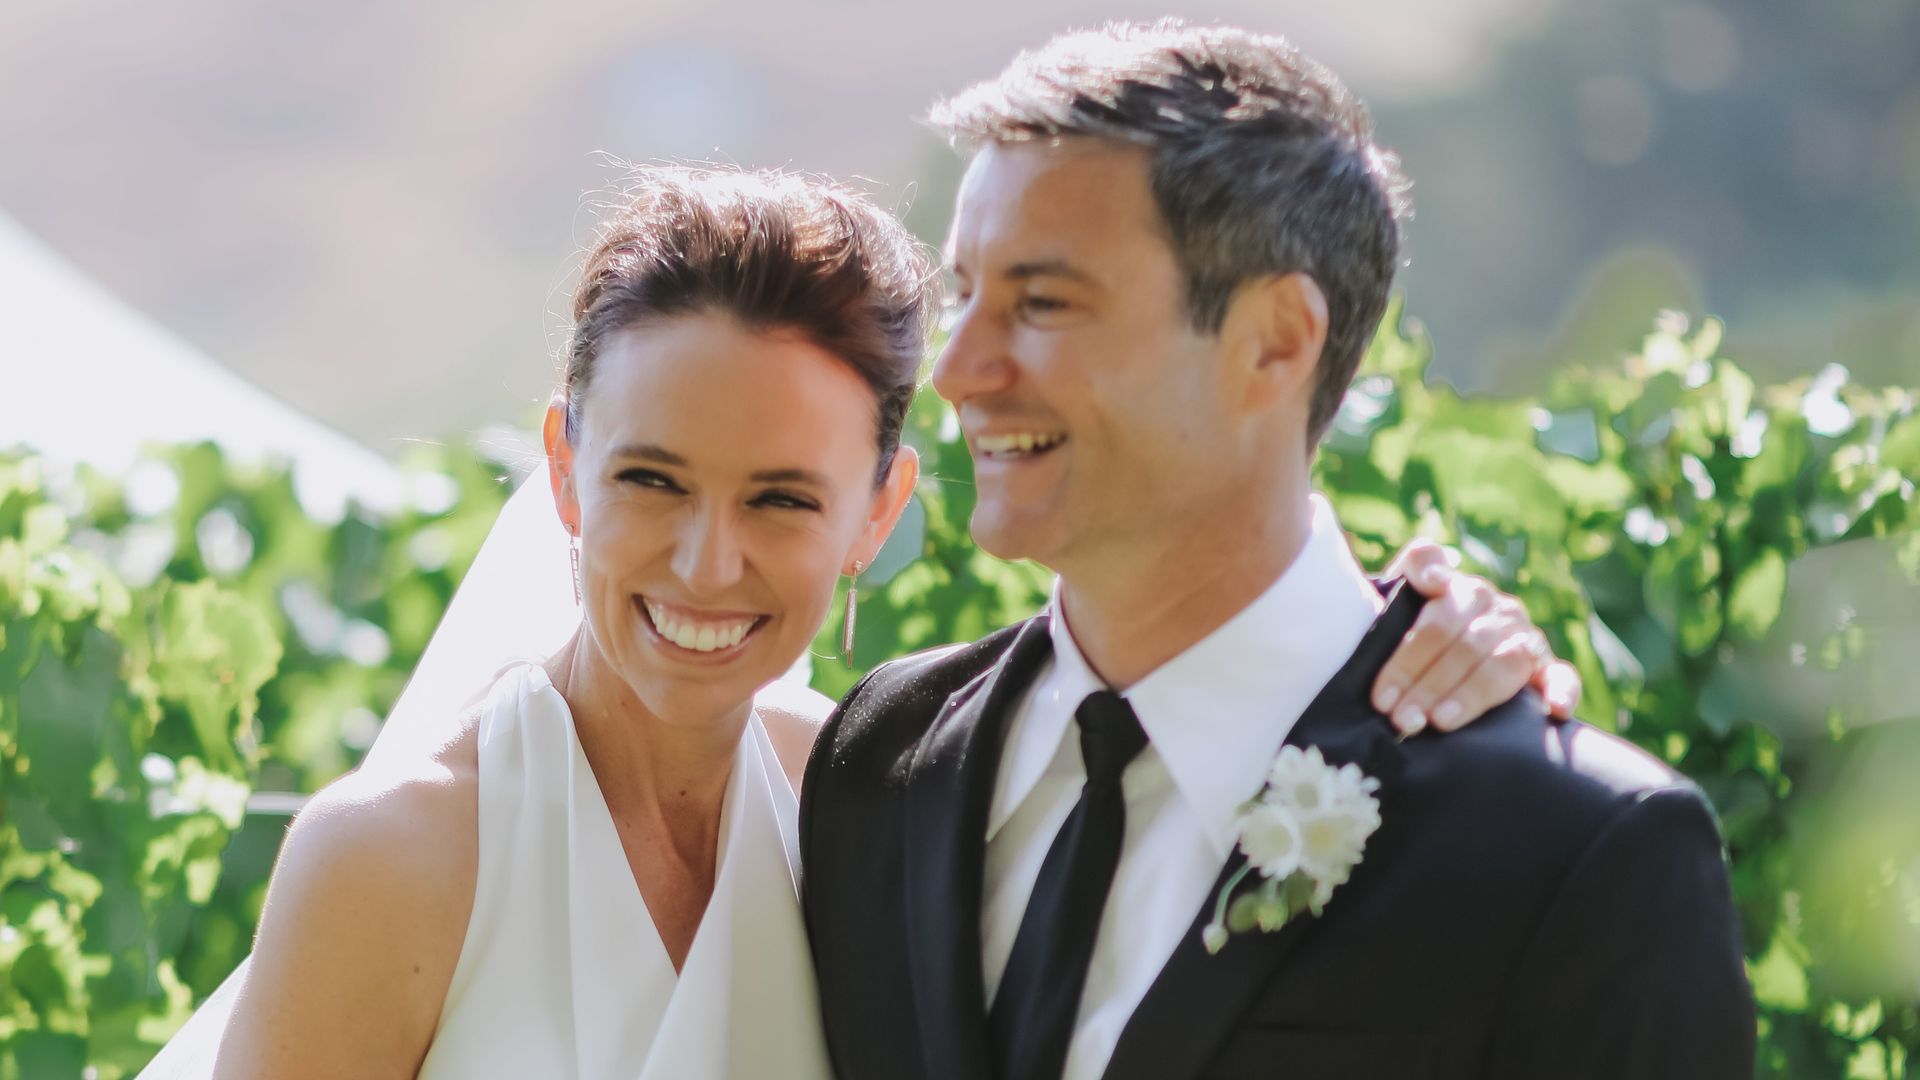 Jacinda Ardern, 43, marries her partner of 10 years Clarke Gayford, 47 in private New Zealand ceremony